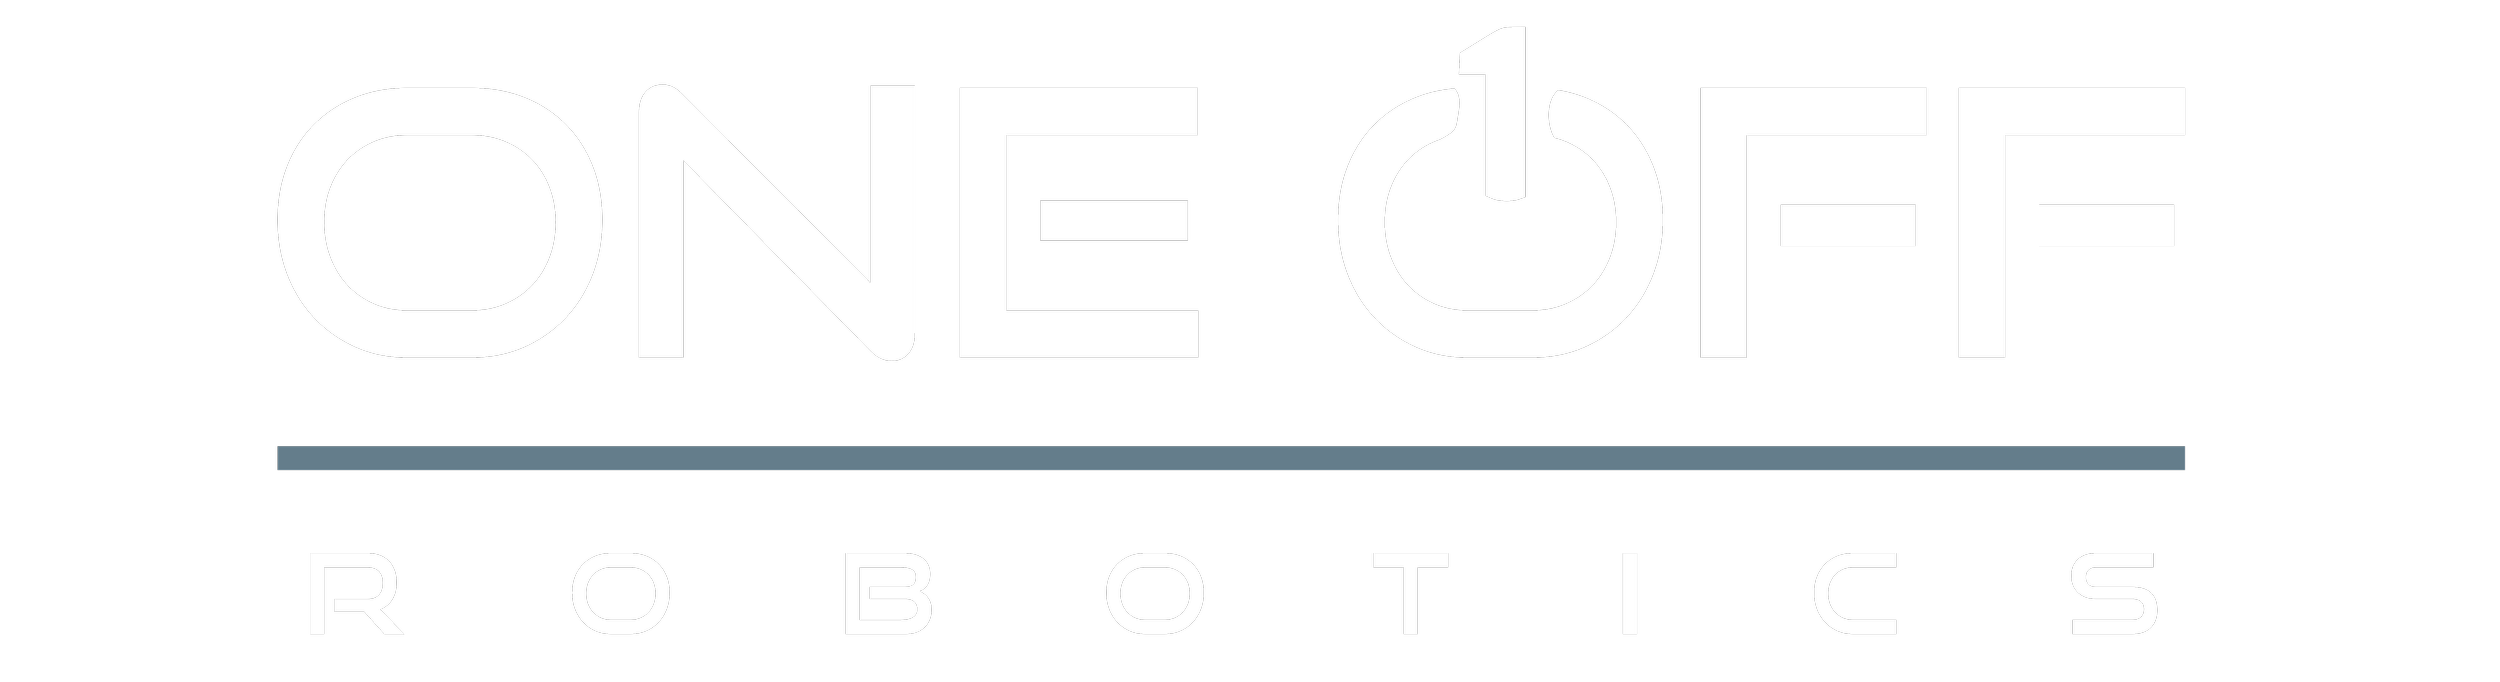 product-robot-meltio 600x600px